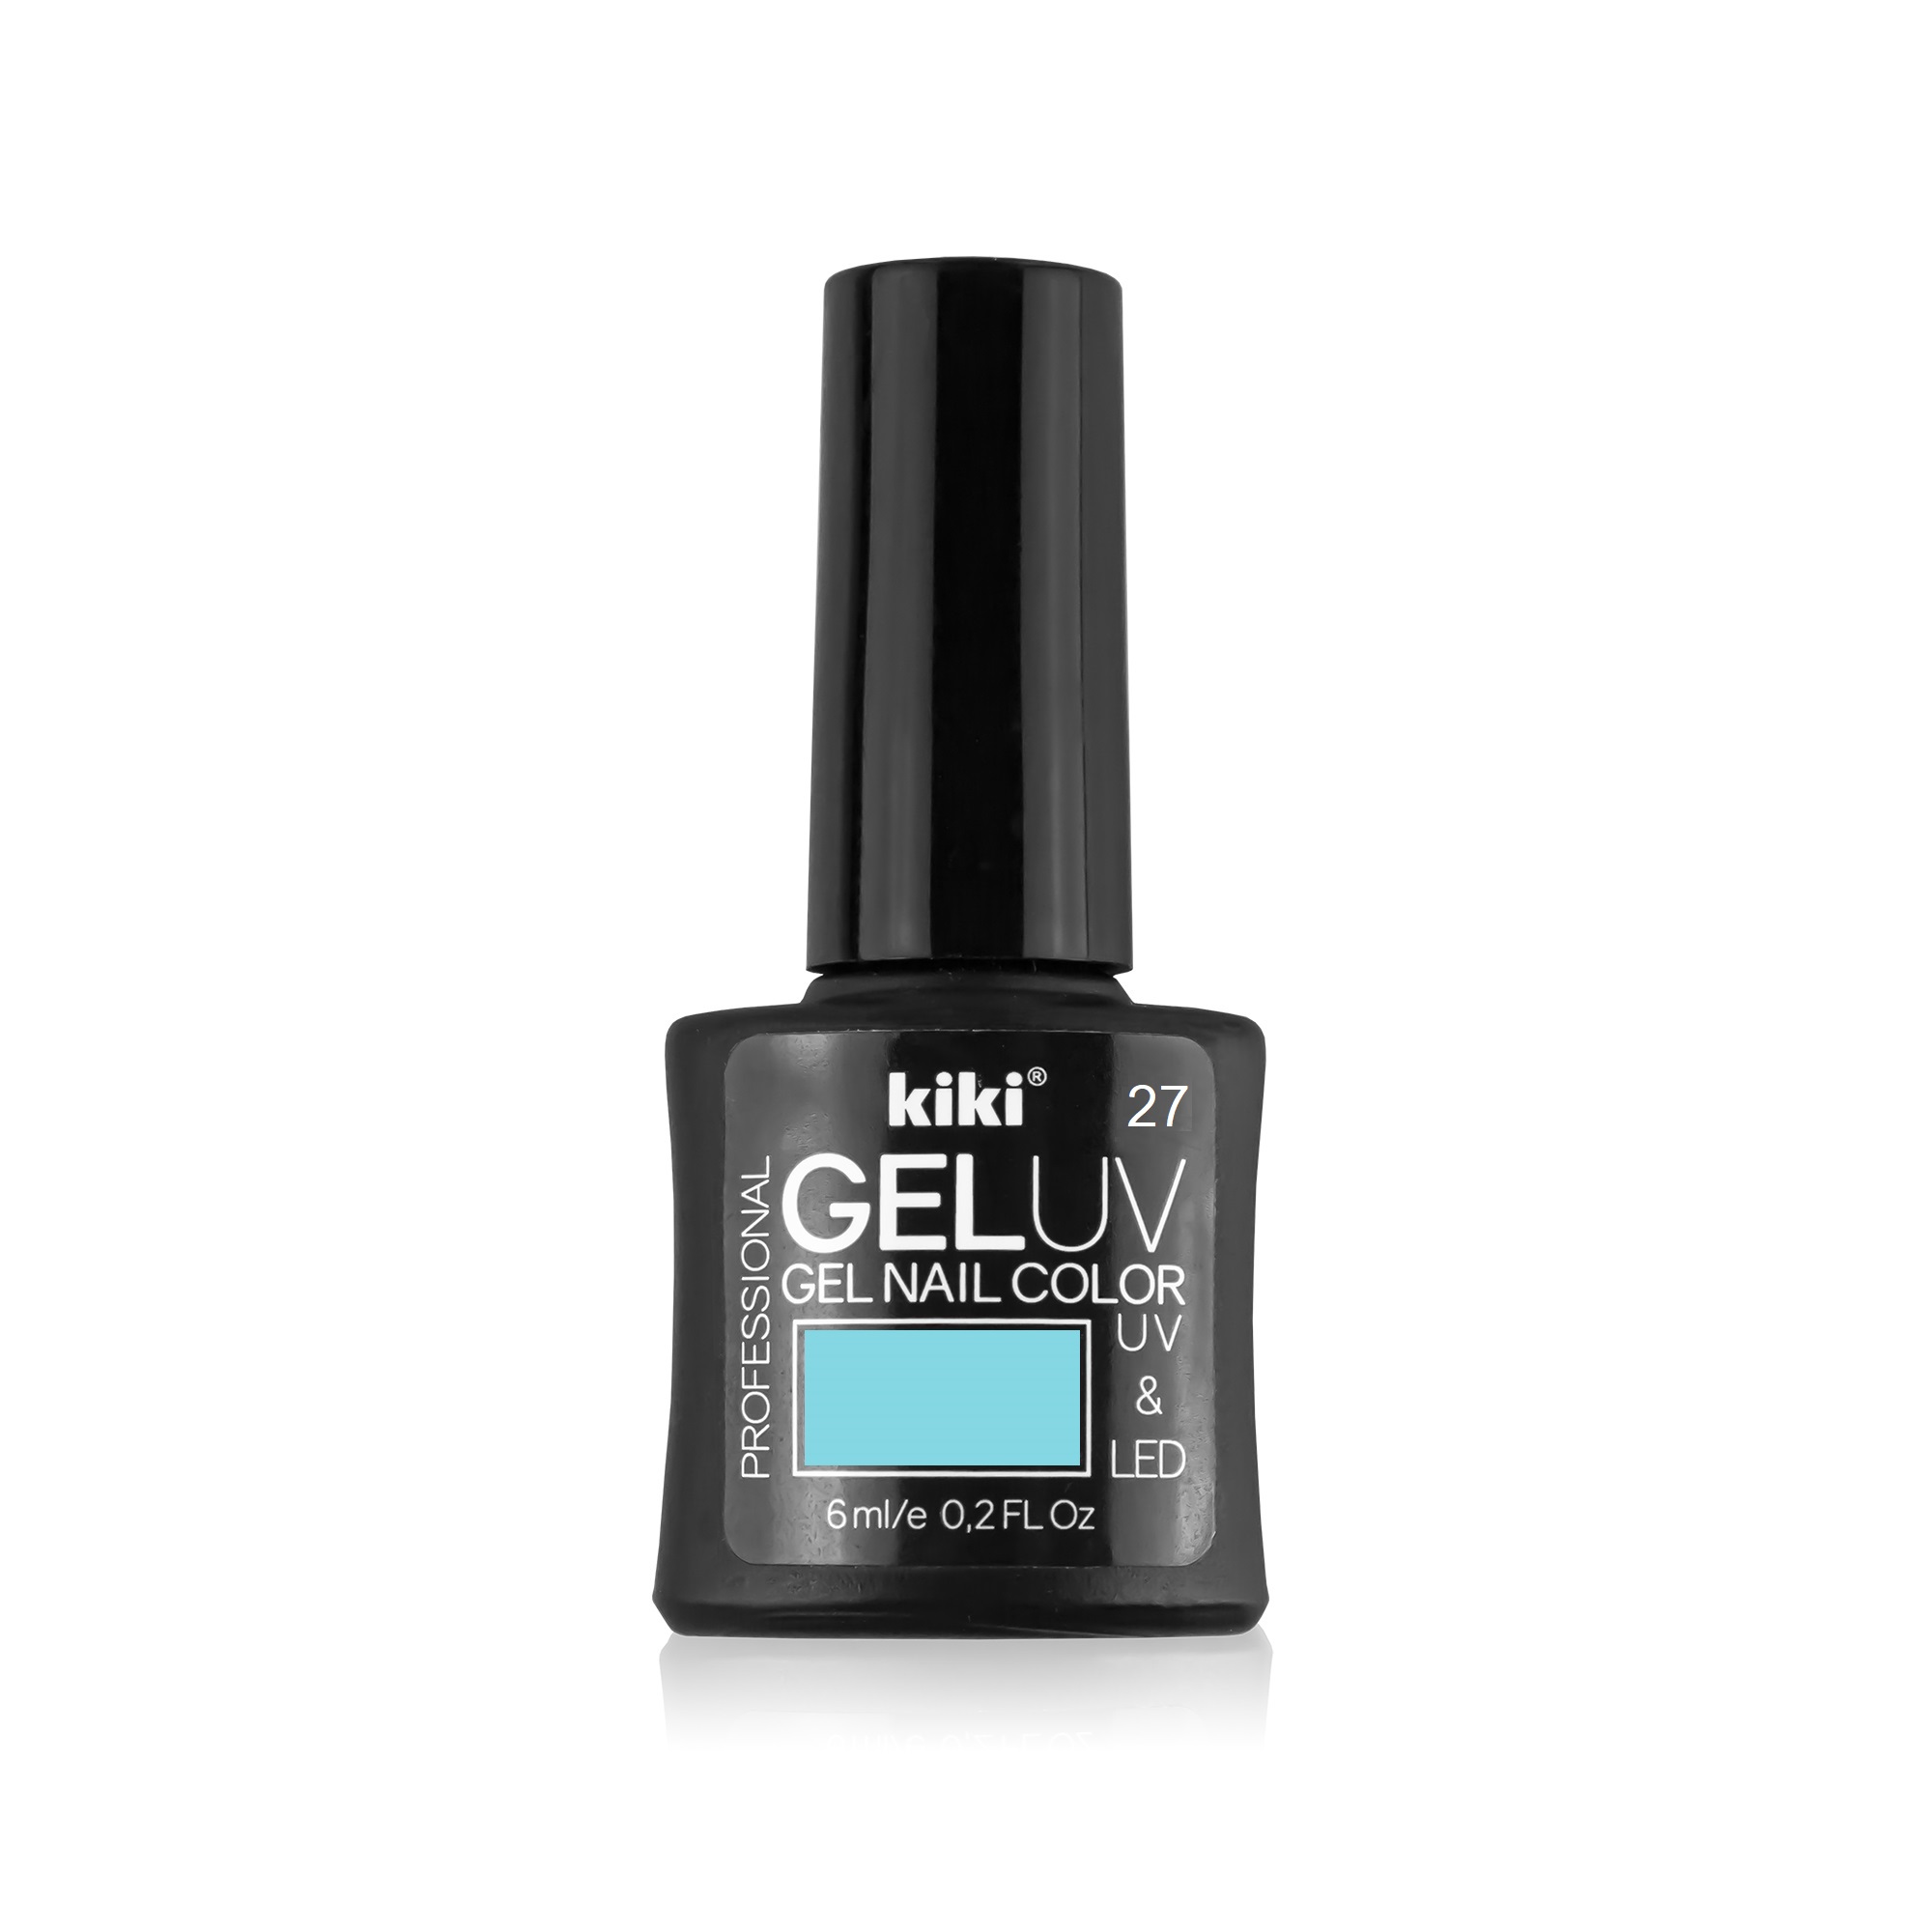 Гель-лак для ногтей Kiki GEL UV LED 27 небесно-голубой - фото 1